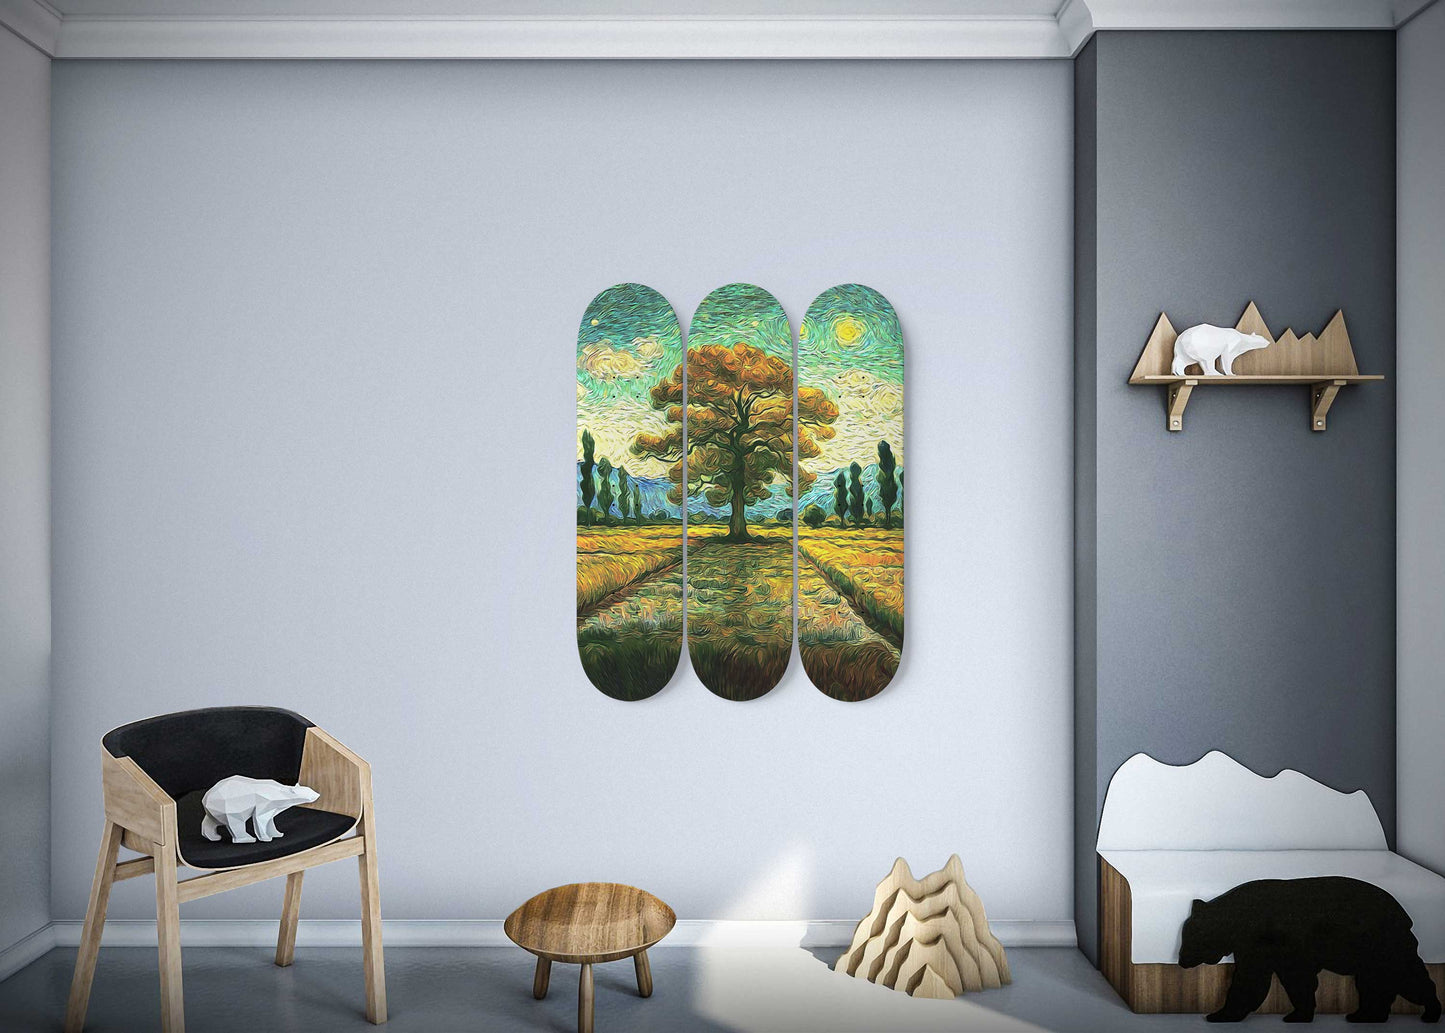 Van Gogh Tree of Life 3-Deck Skateboard Wall Art: Nature-Inspired Design